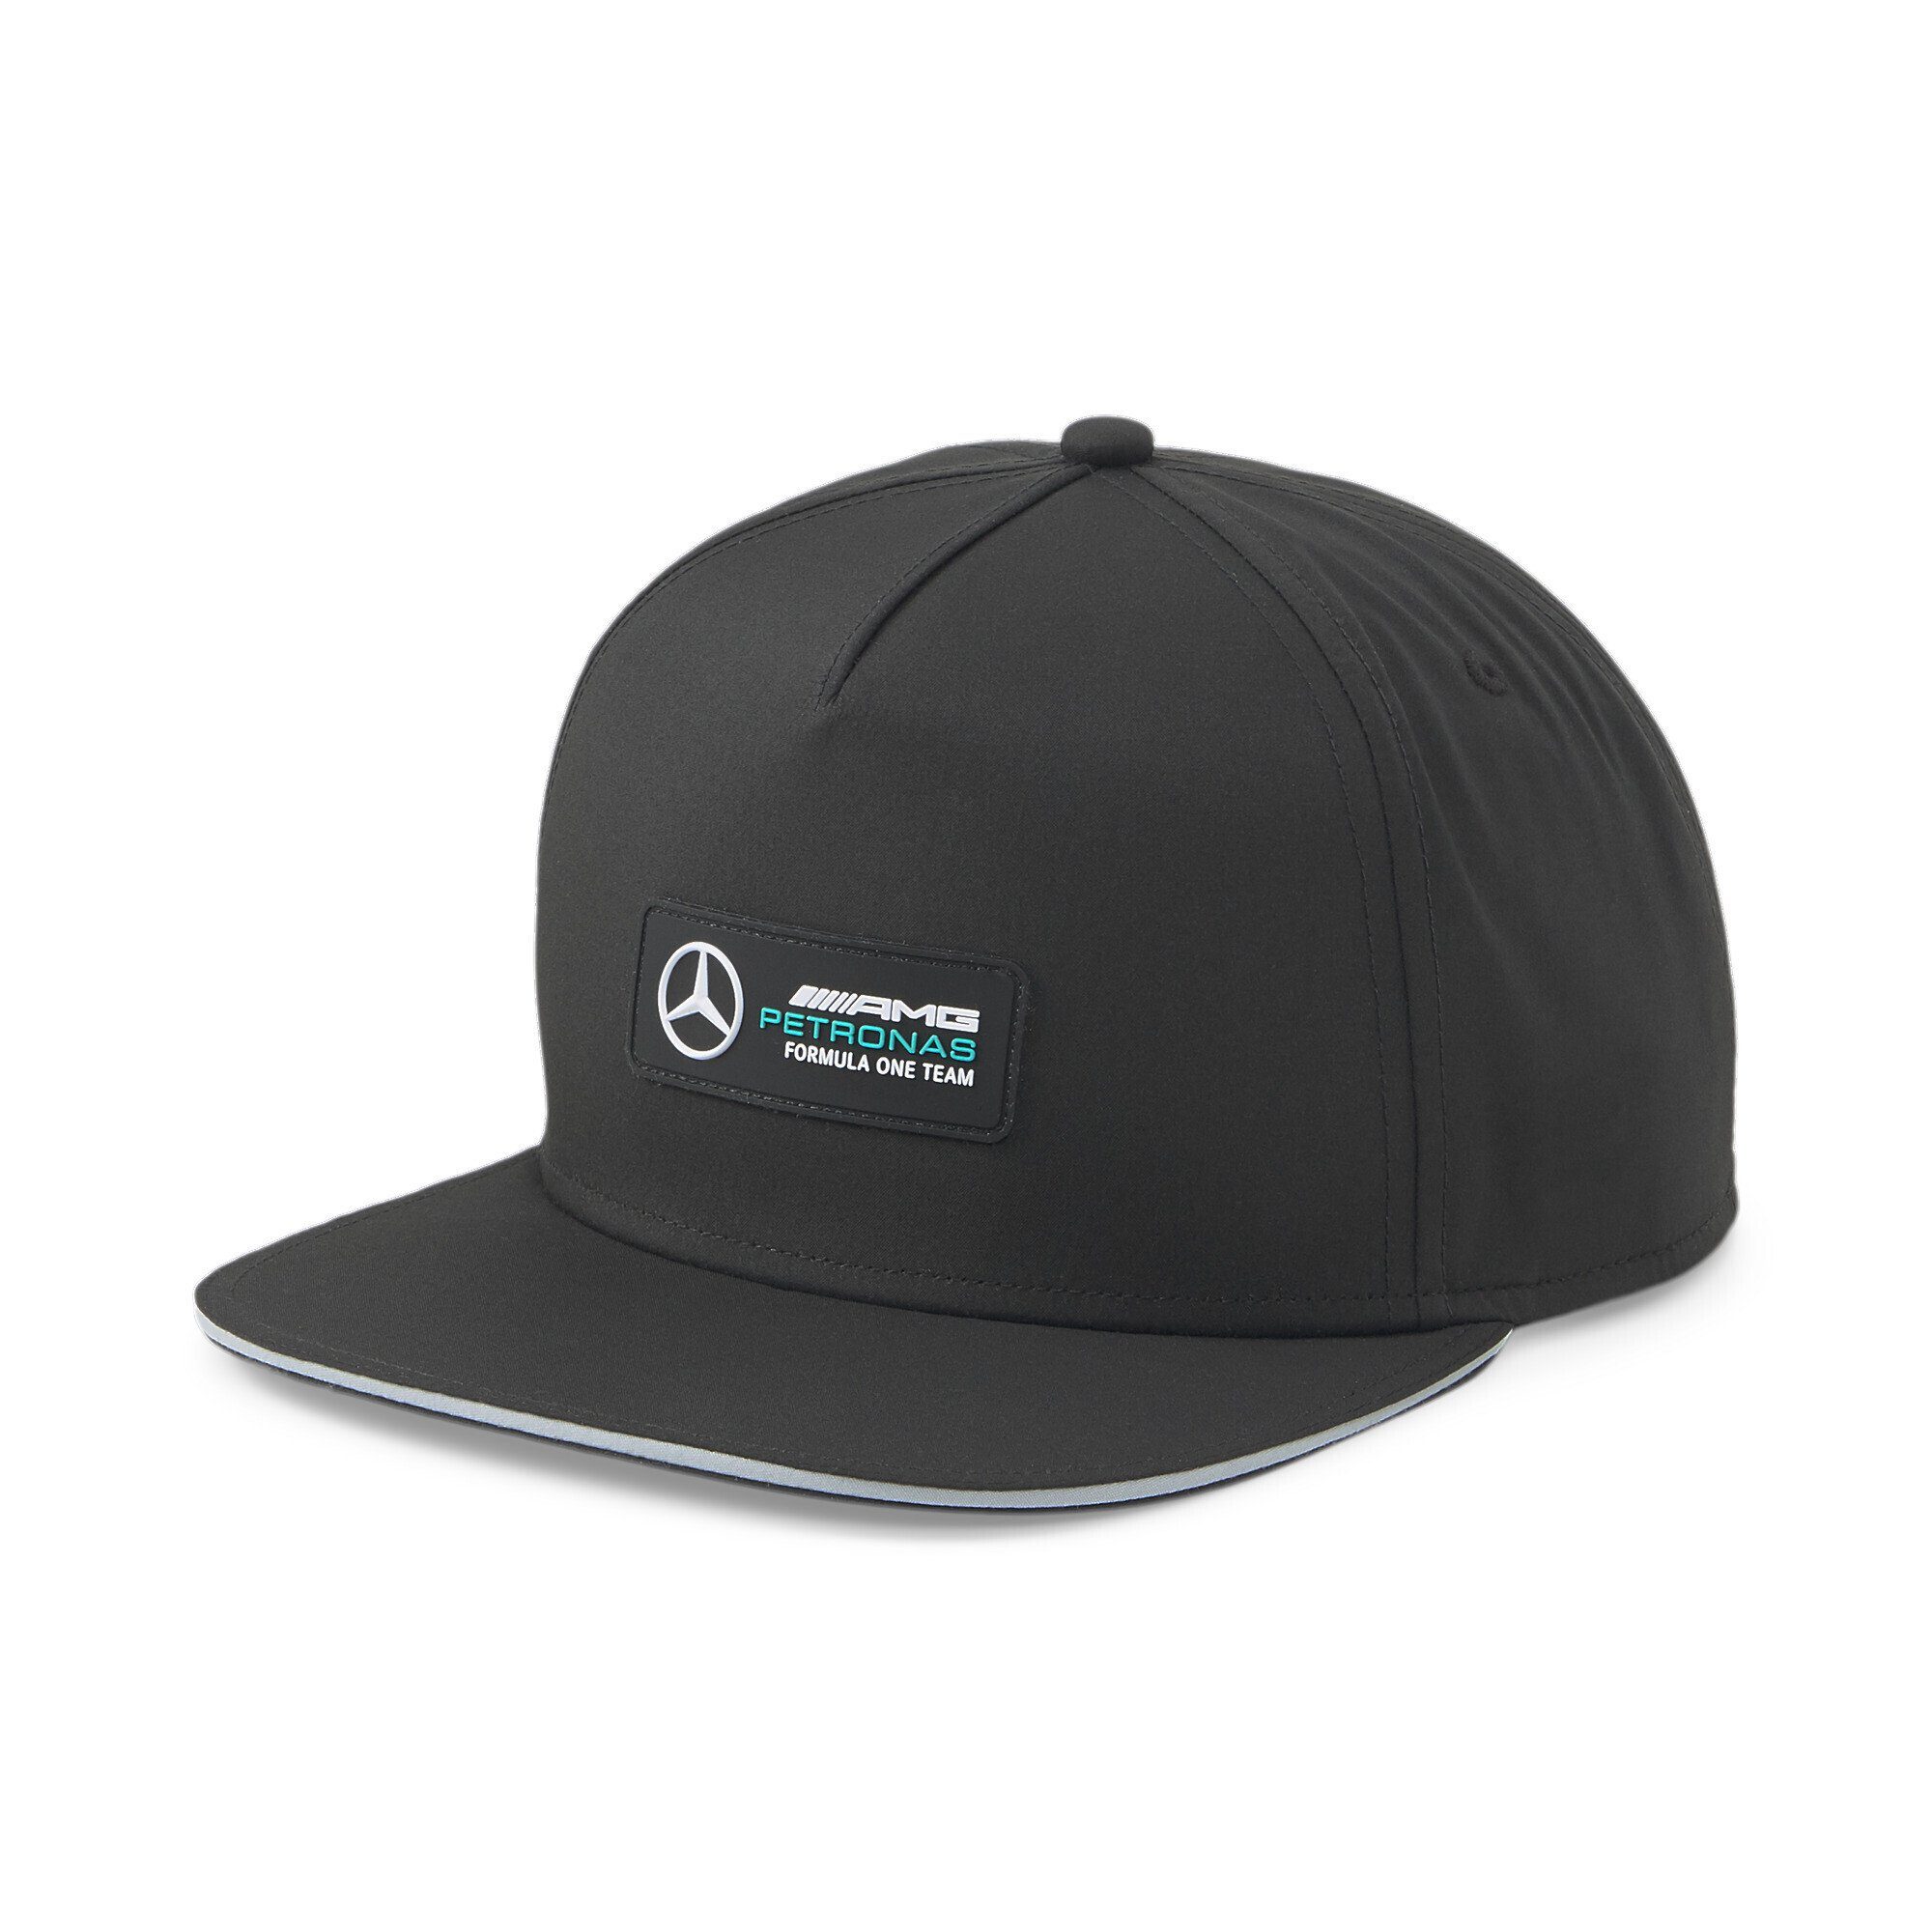 PUMA Flex Cap Mercedes-AMG Schirm Herren mit Petronas Cap Motorsport flachem